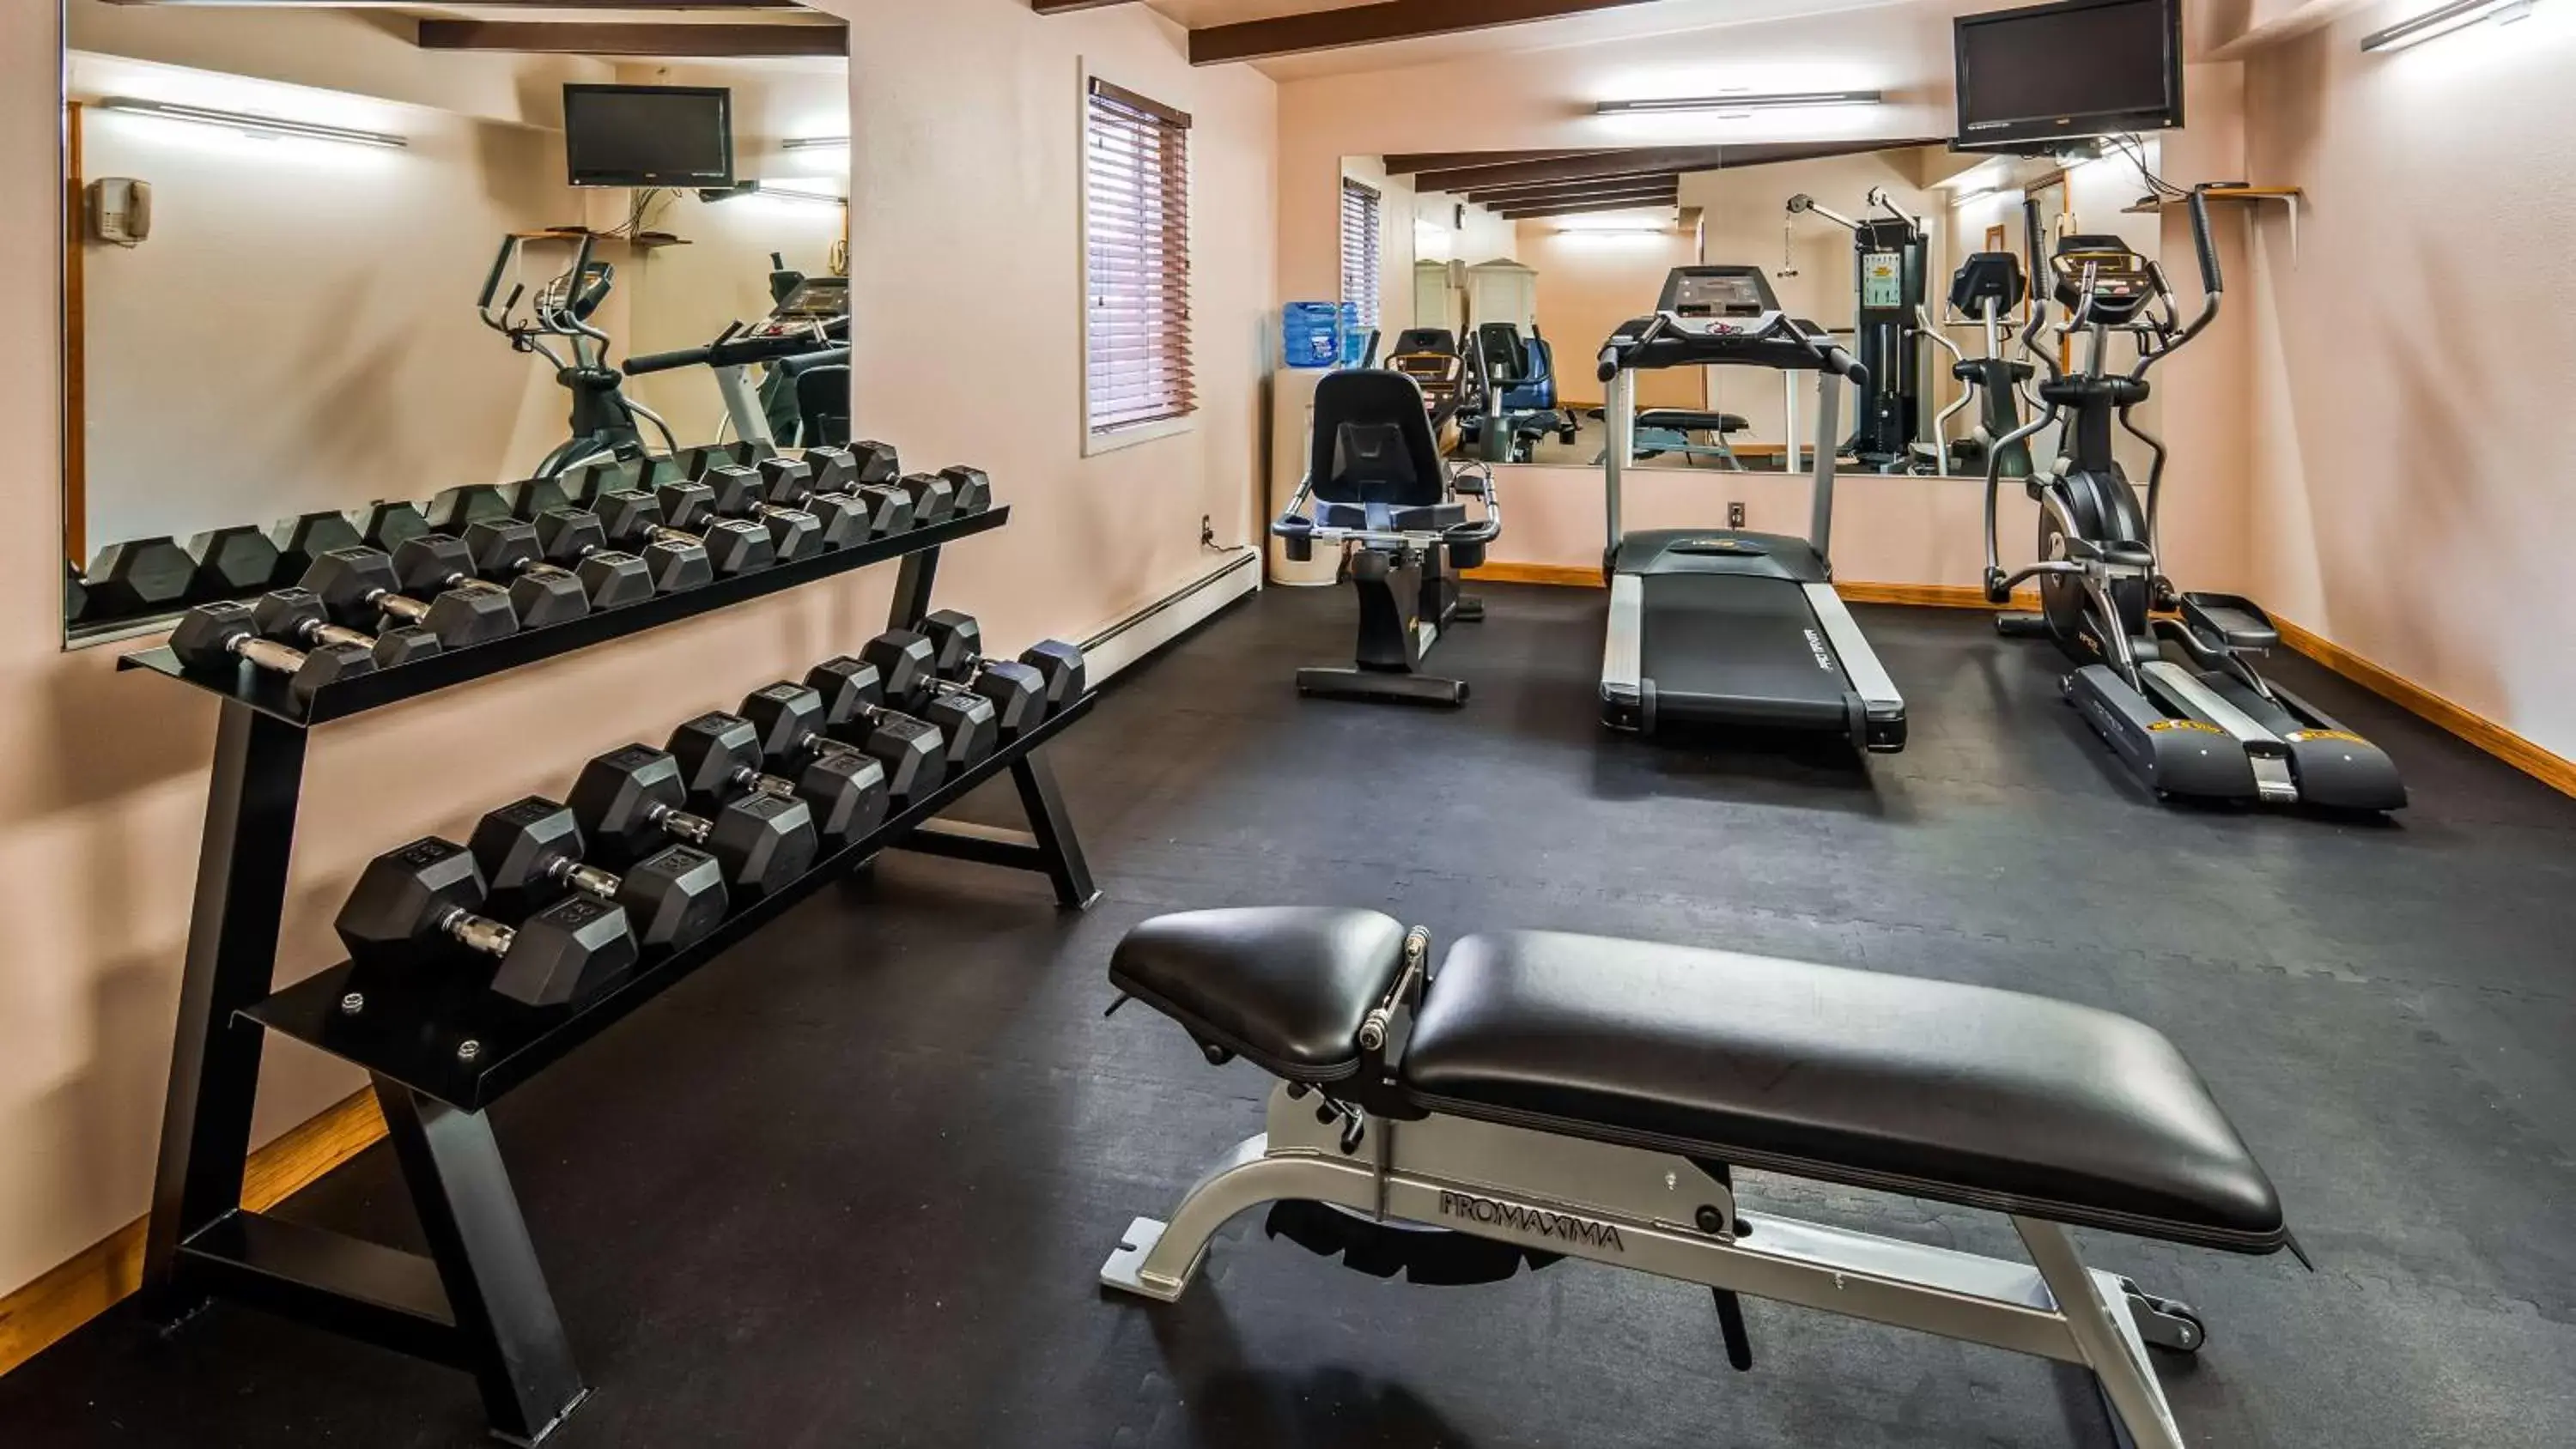 Fitness centre/facilities, Fitness Center/Facilities in Best Western Valdez Harbor Inn